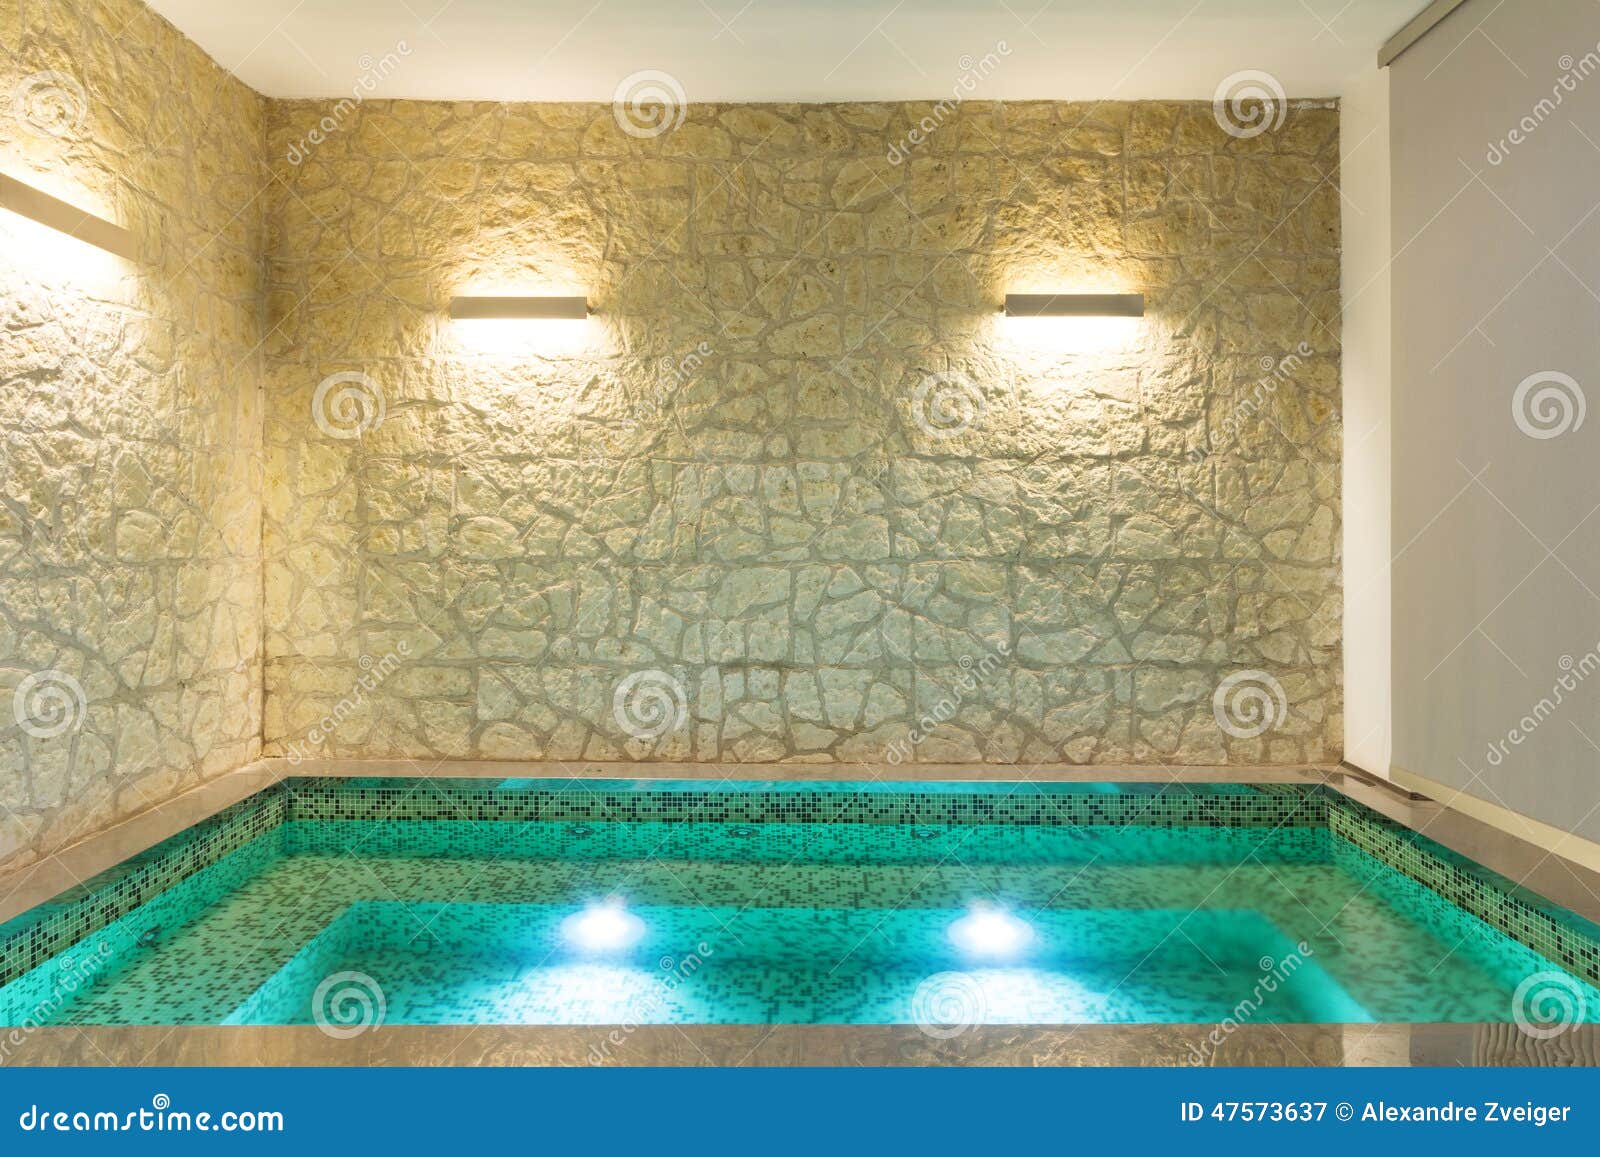 Interior Hot Tub Stock Image Image Of Inside Pool 47573637